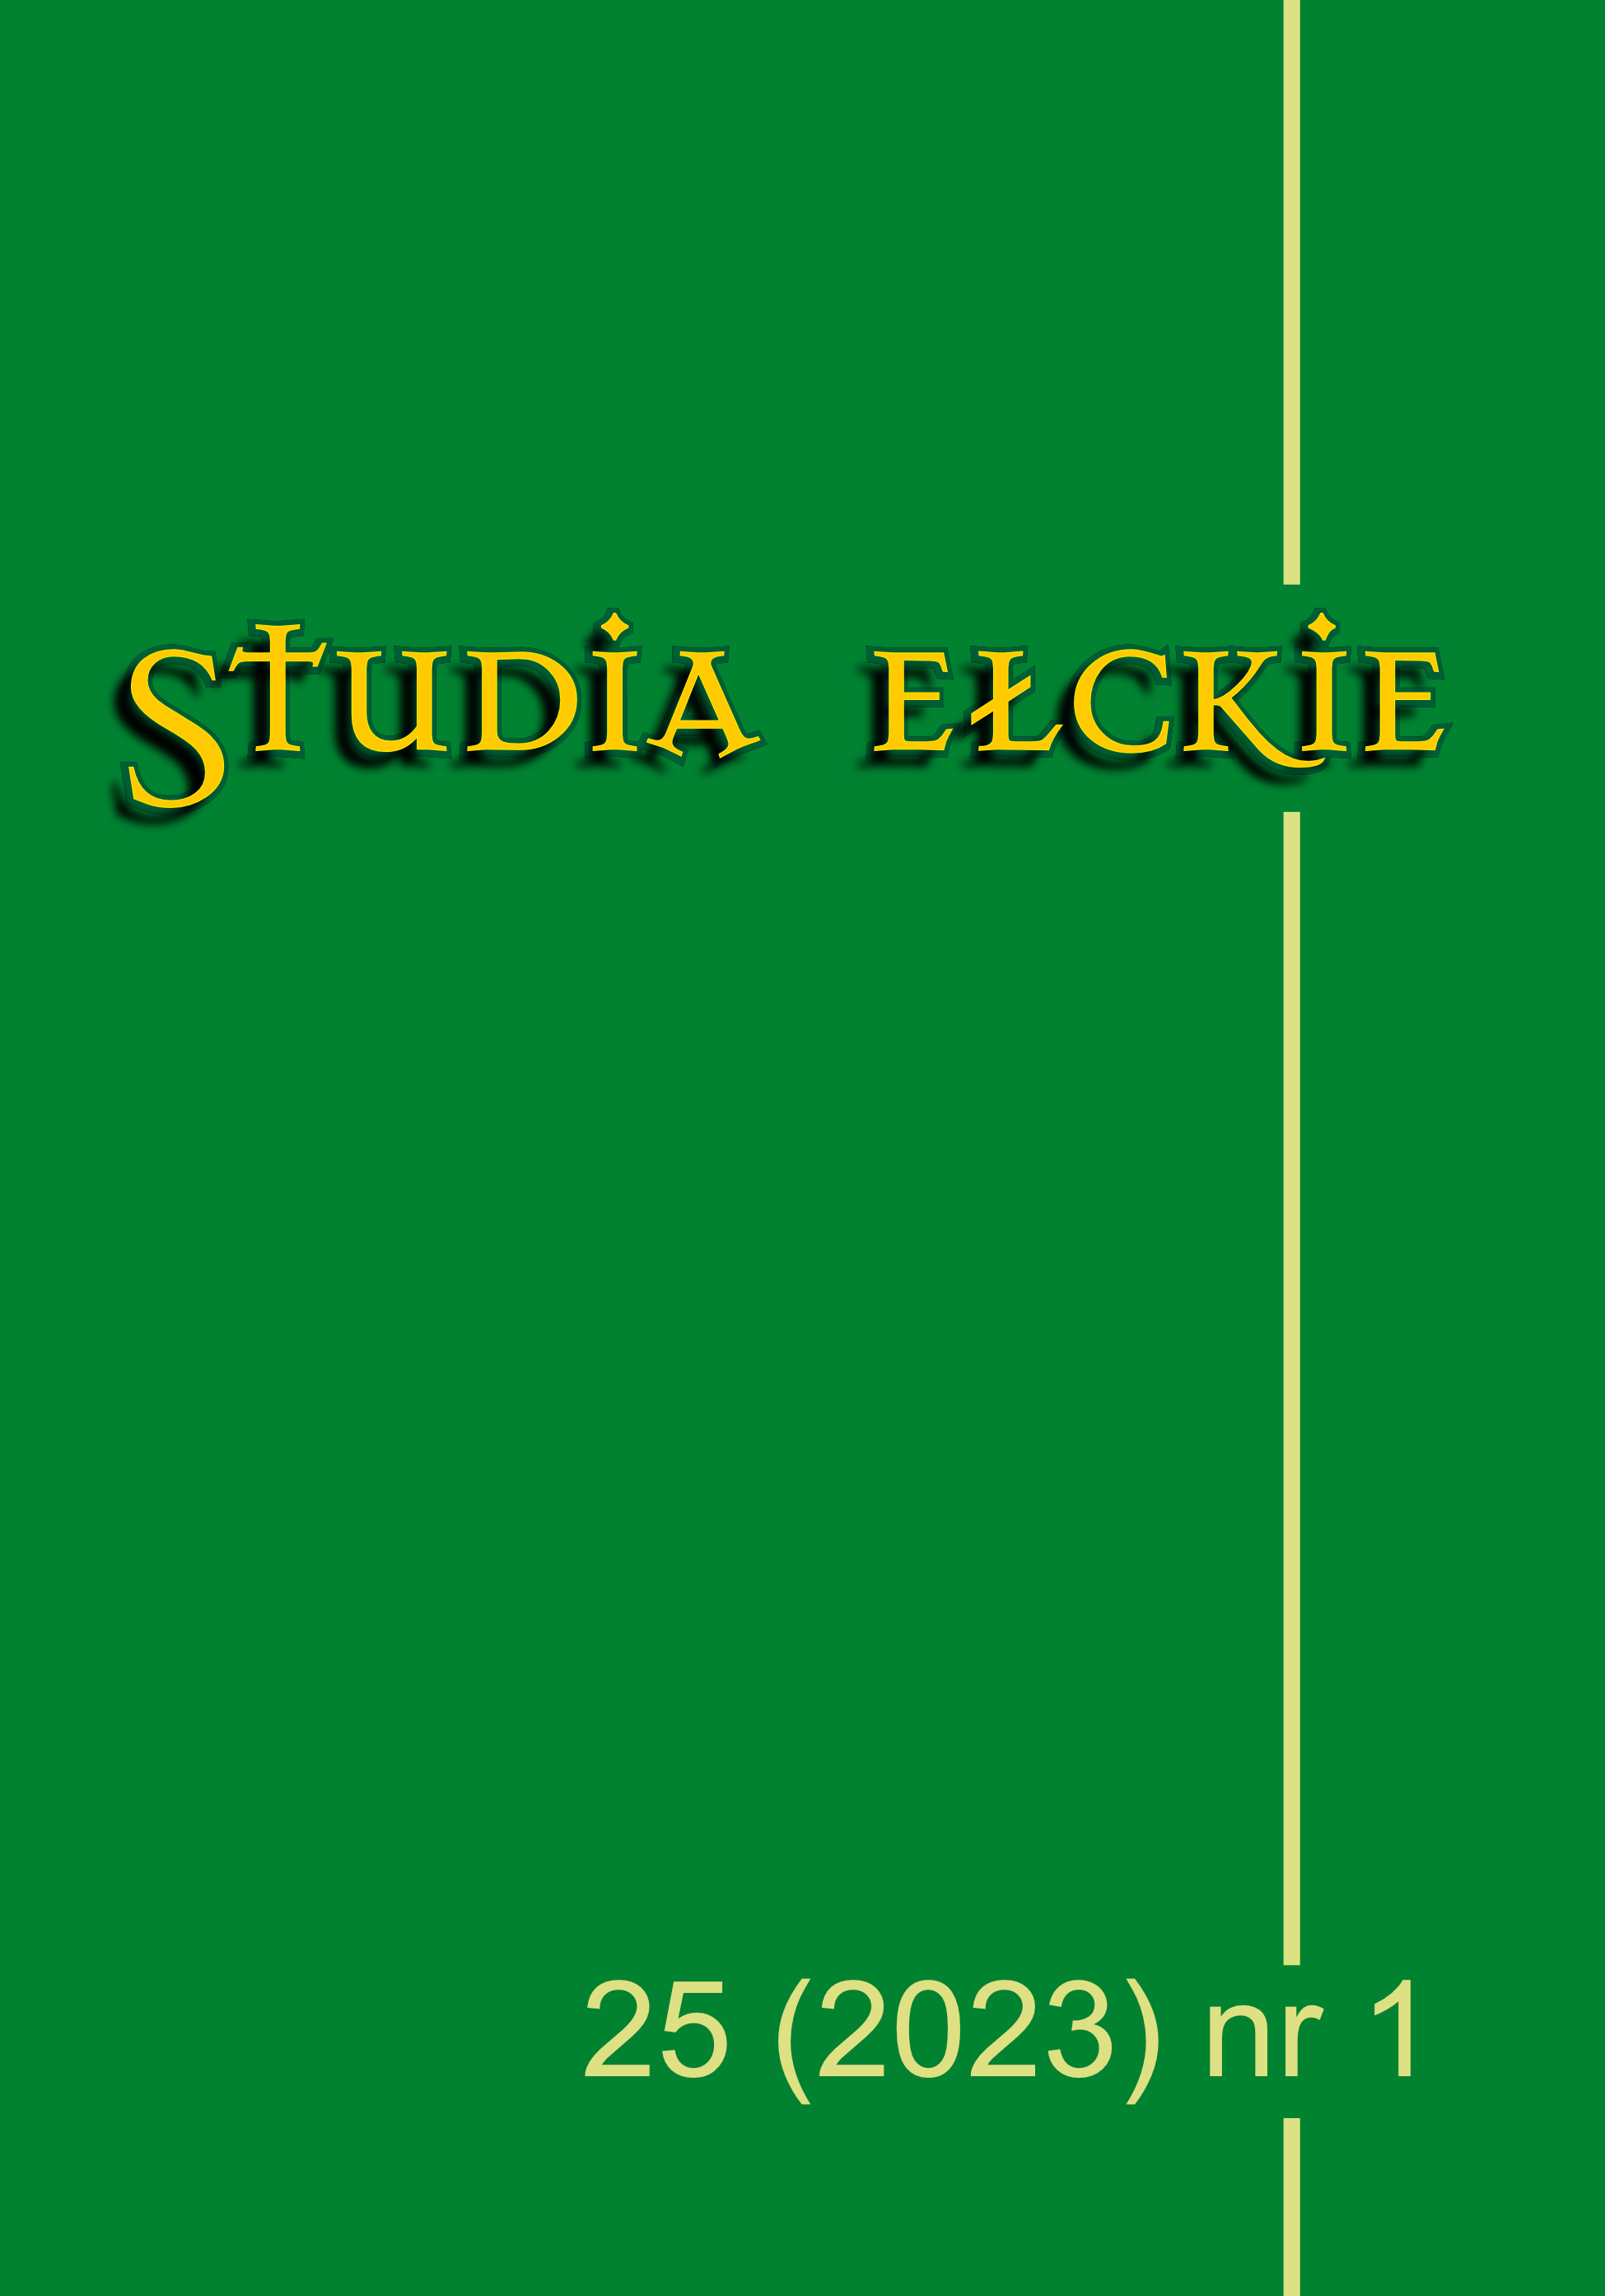 Report of the editor-in-chief of "Studia Ełckie"
bishop Dr. Dariusz Zalewski for 2022 Cover Image